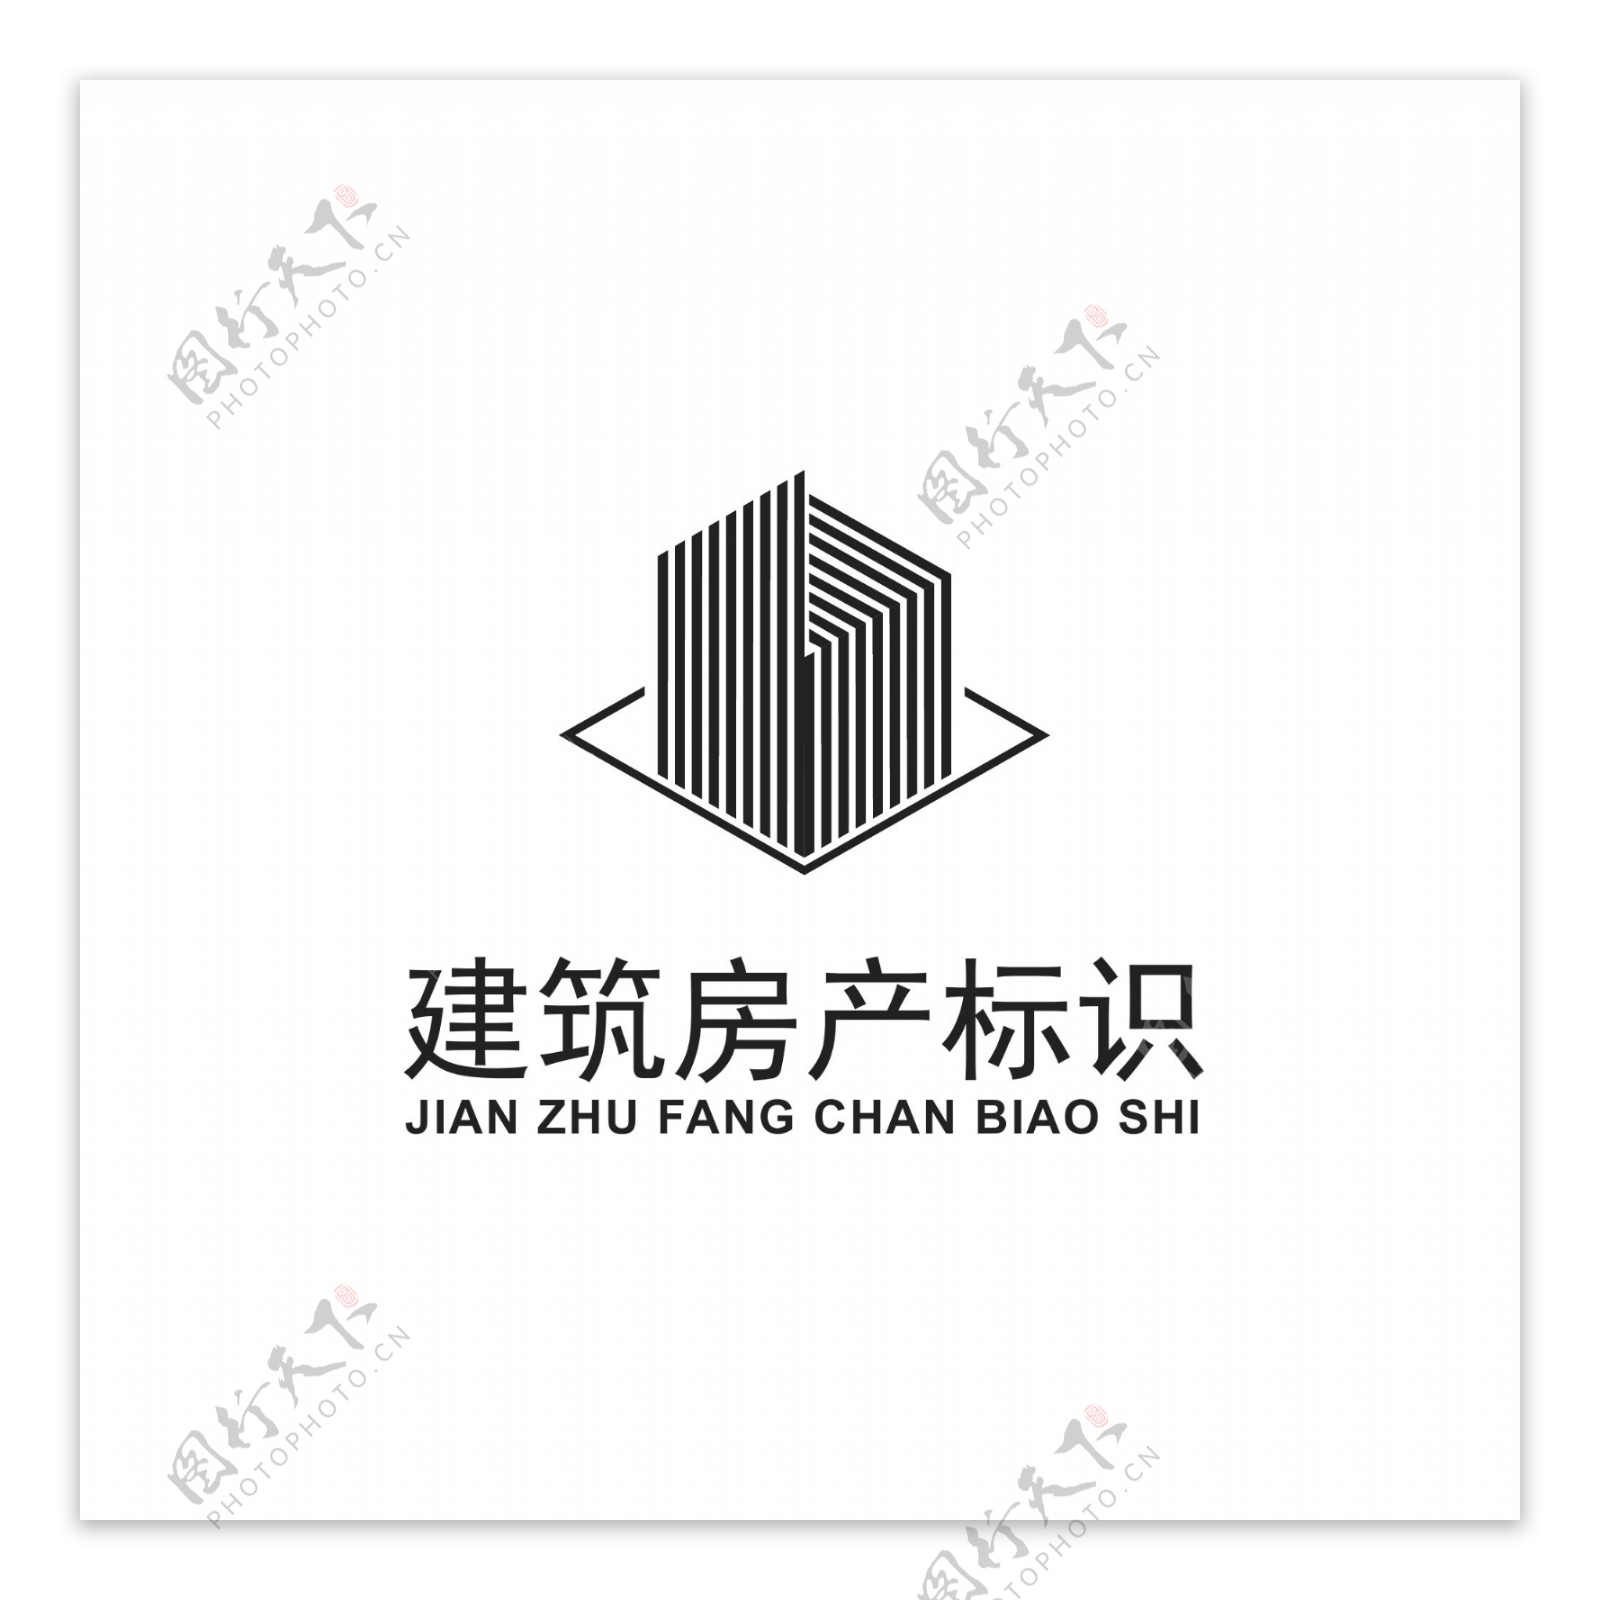 建筑房产logo